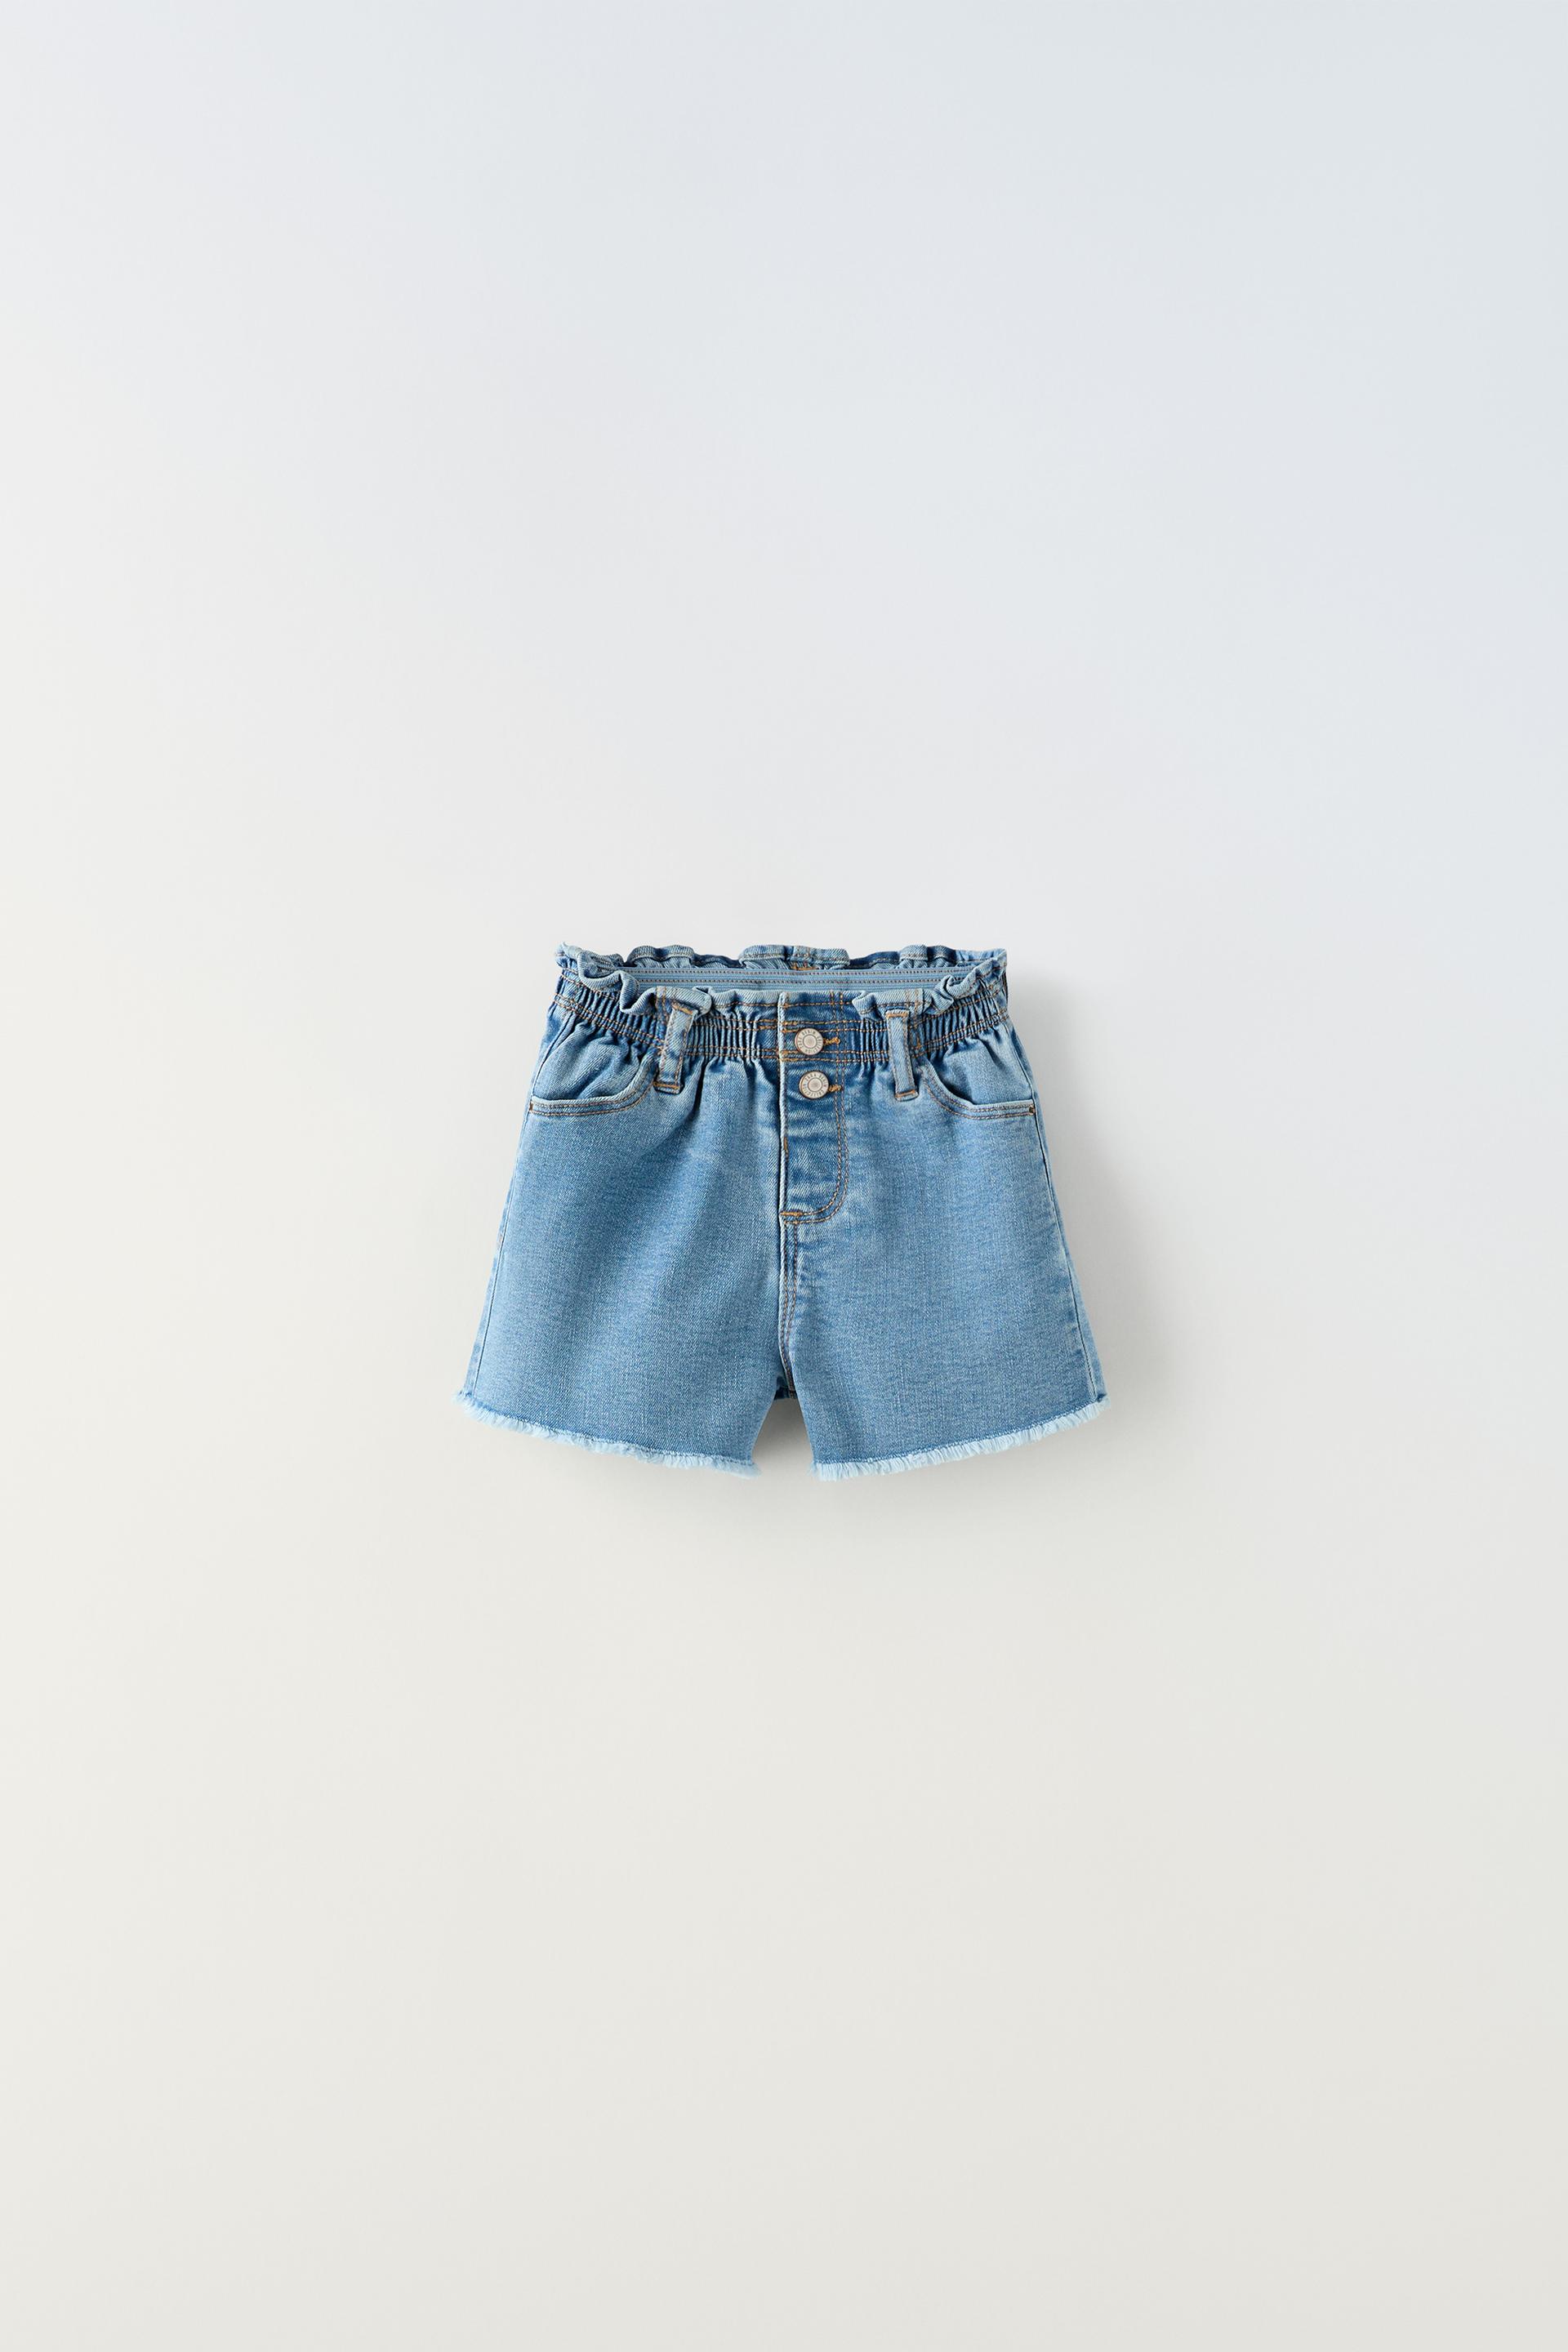 JXAURA Denim shorts with 30% discount!